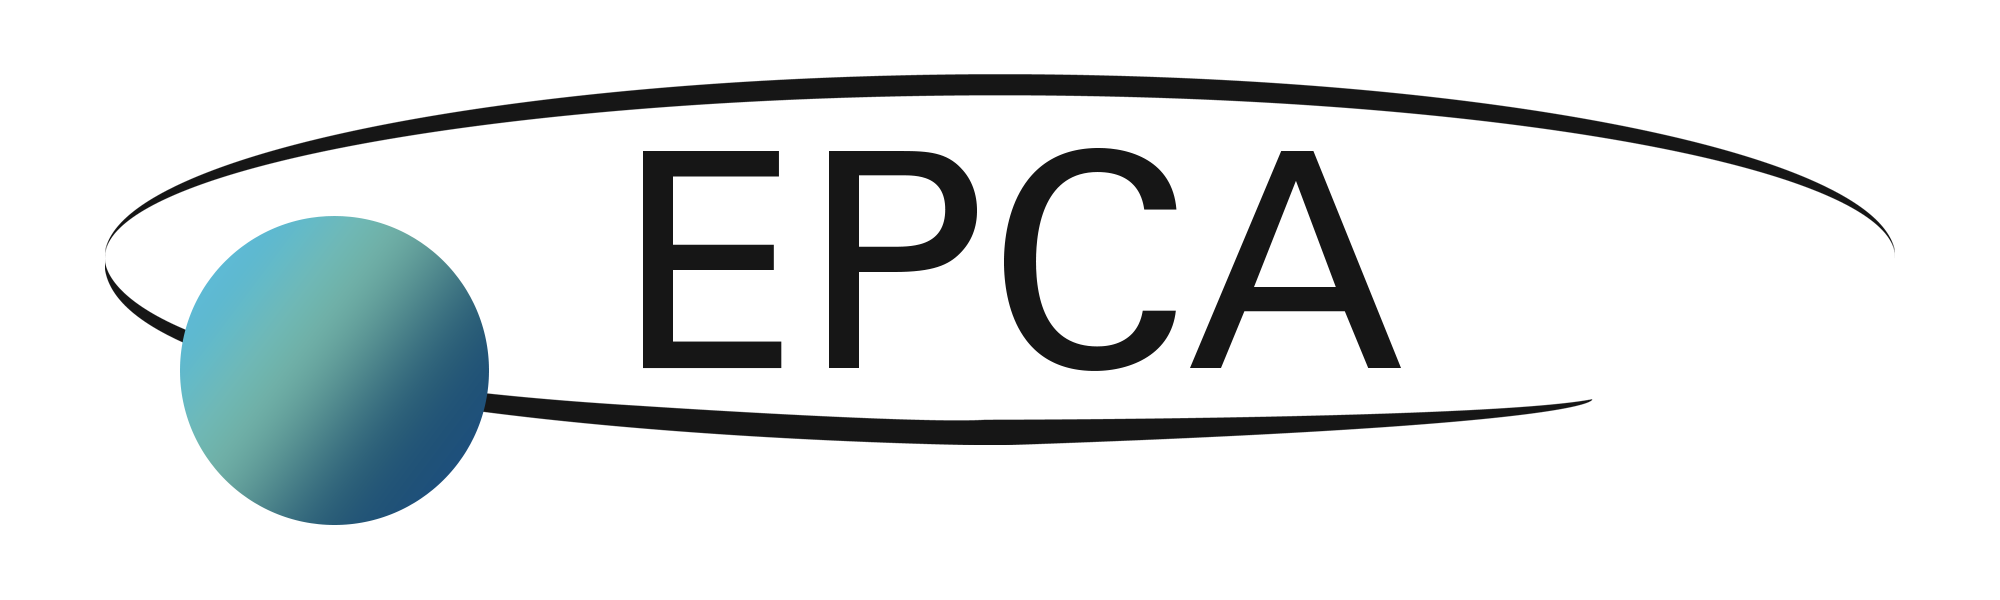 #EPCA56 – 56th Annual Meeting